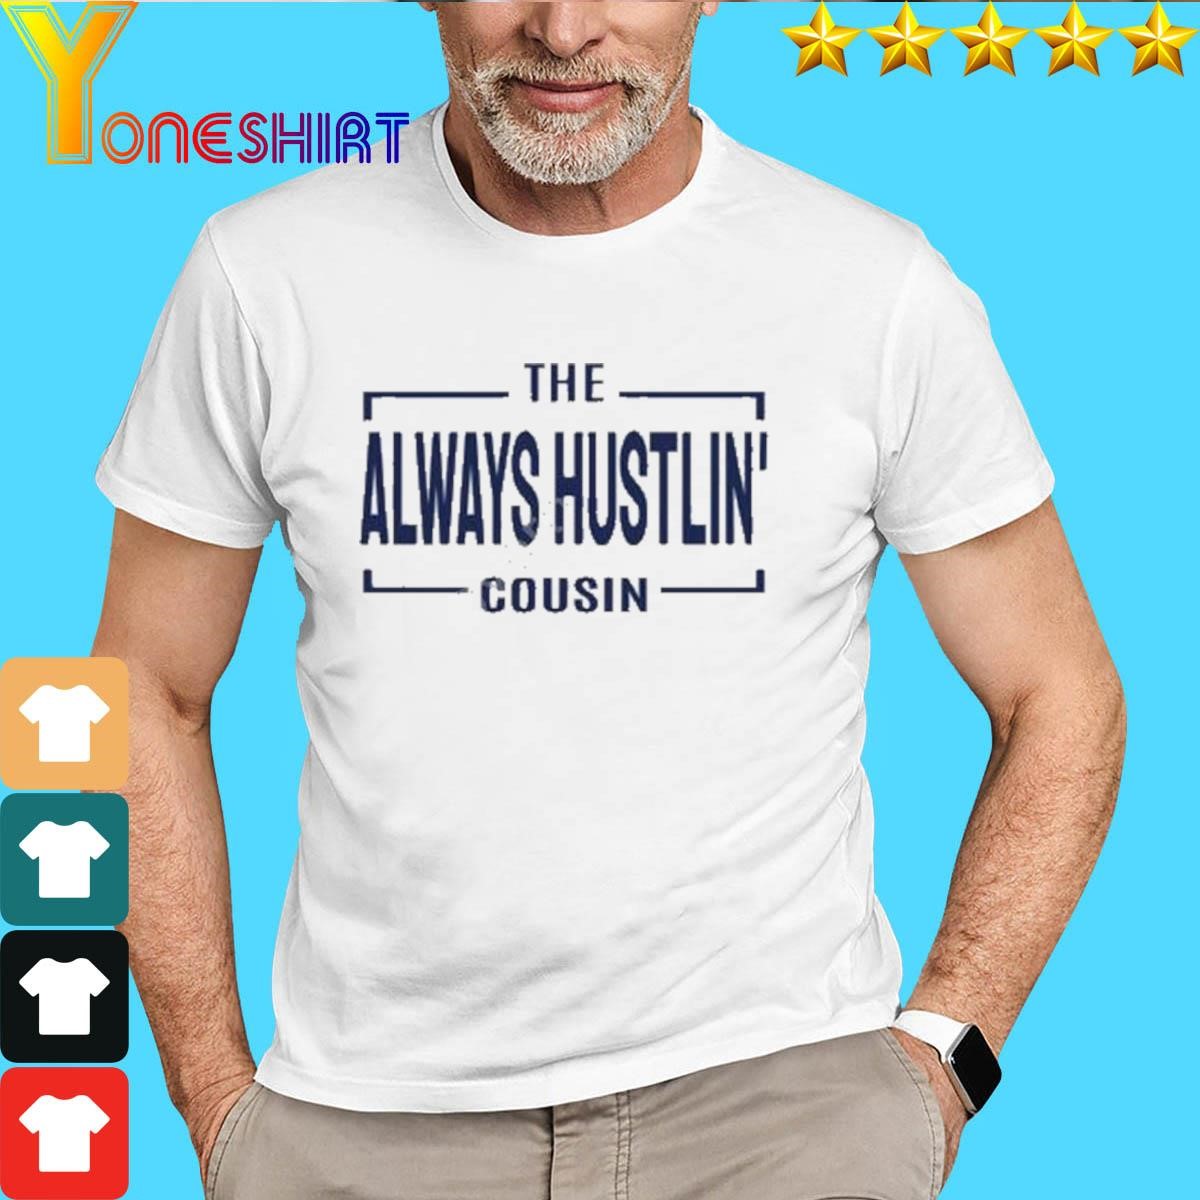 The Always Hustlin’ Cousin Shirt